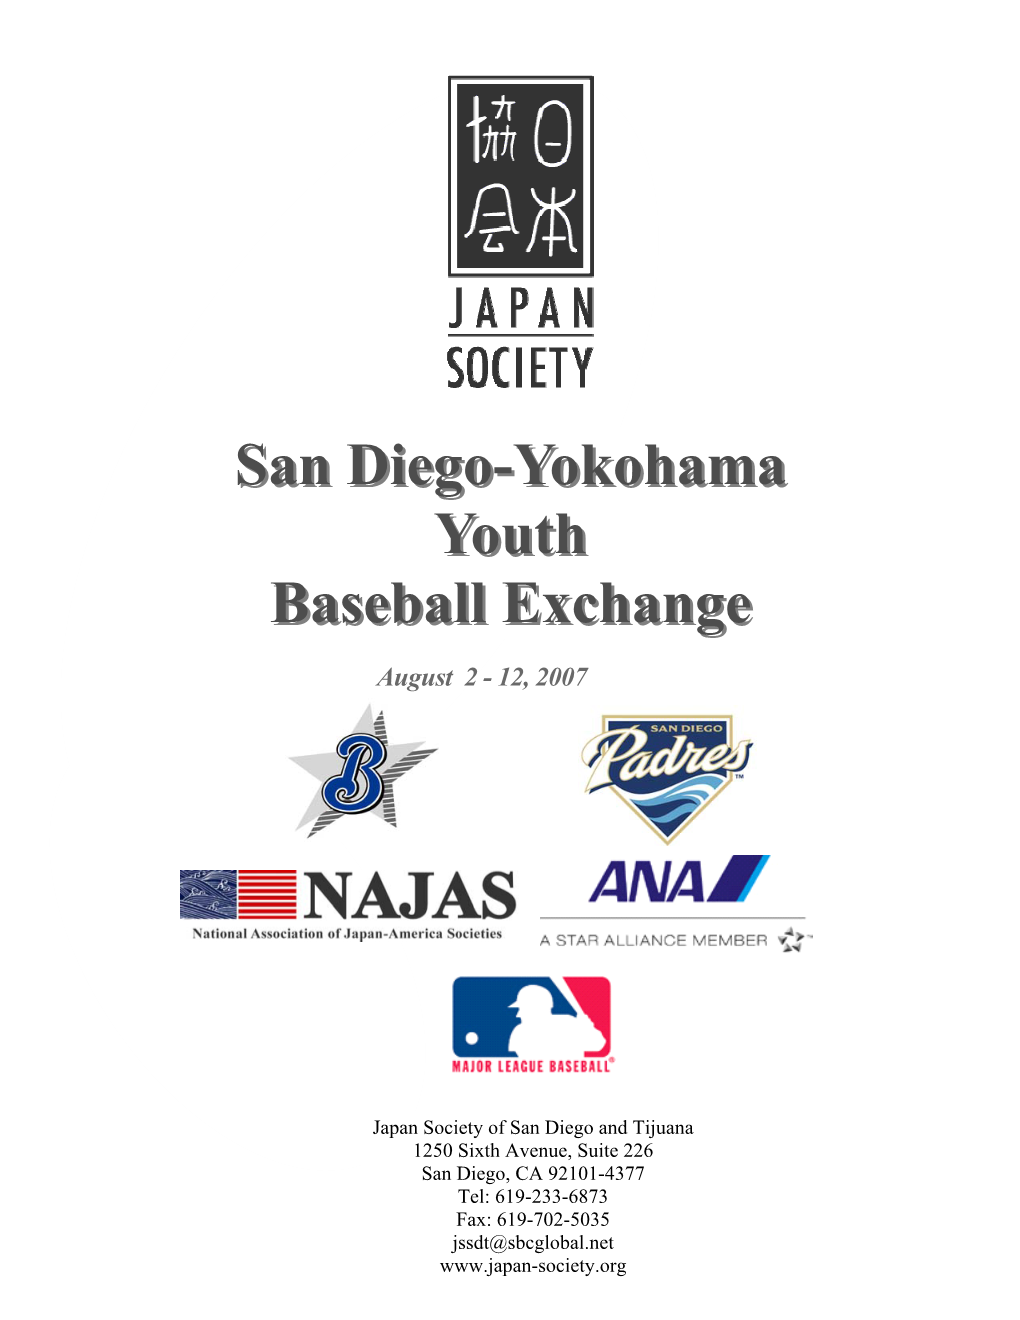 San Diego-Yokohama Youth Baseball Exchange 2007 Collaborating Organizations & Participants